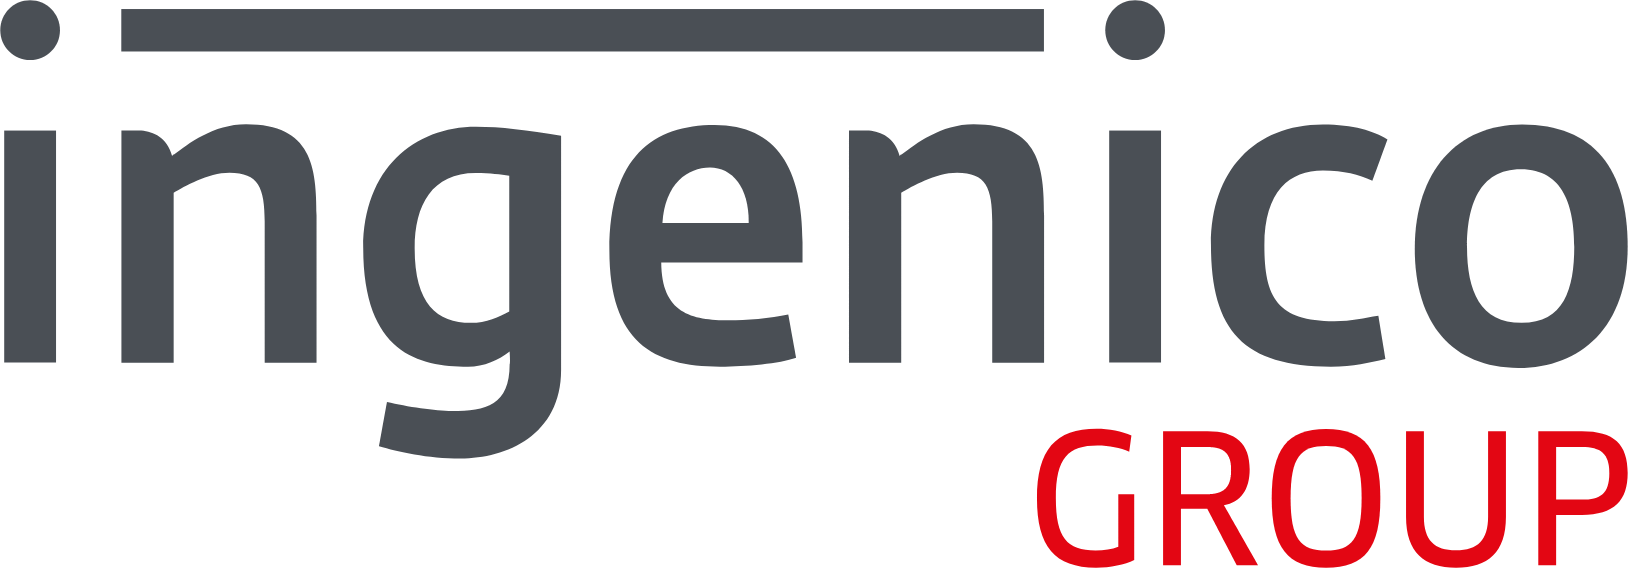 Ingenico logo large (transparent PNG)